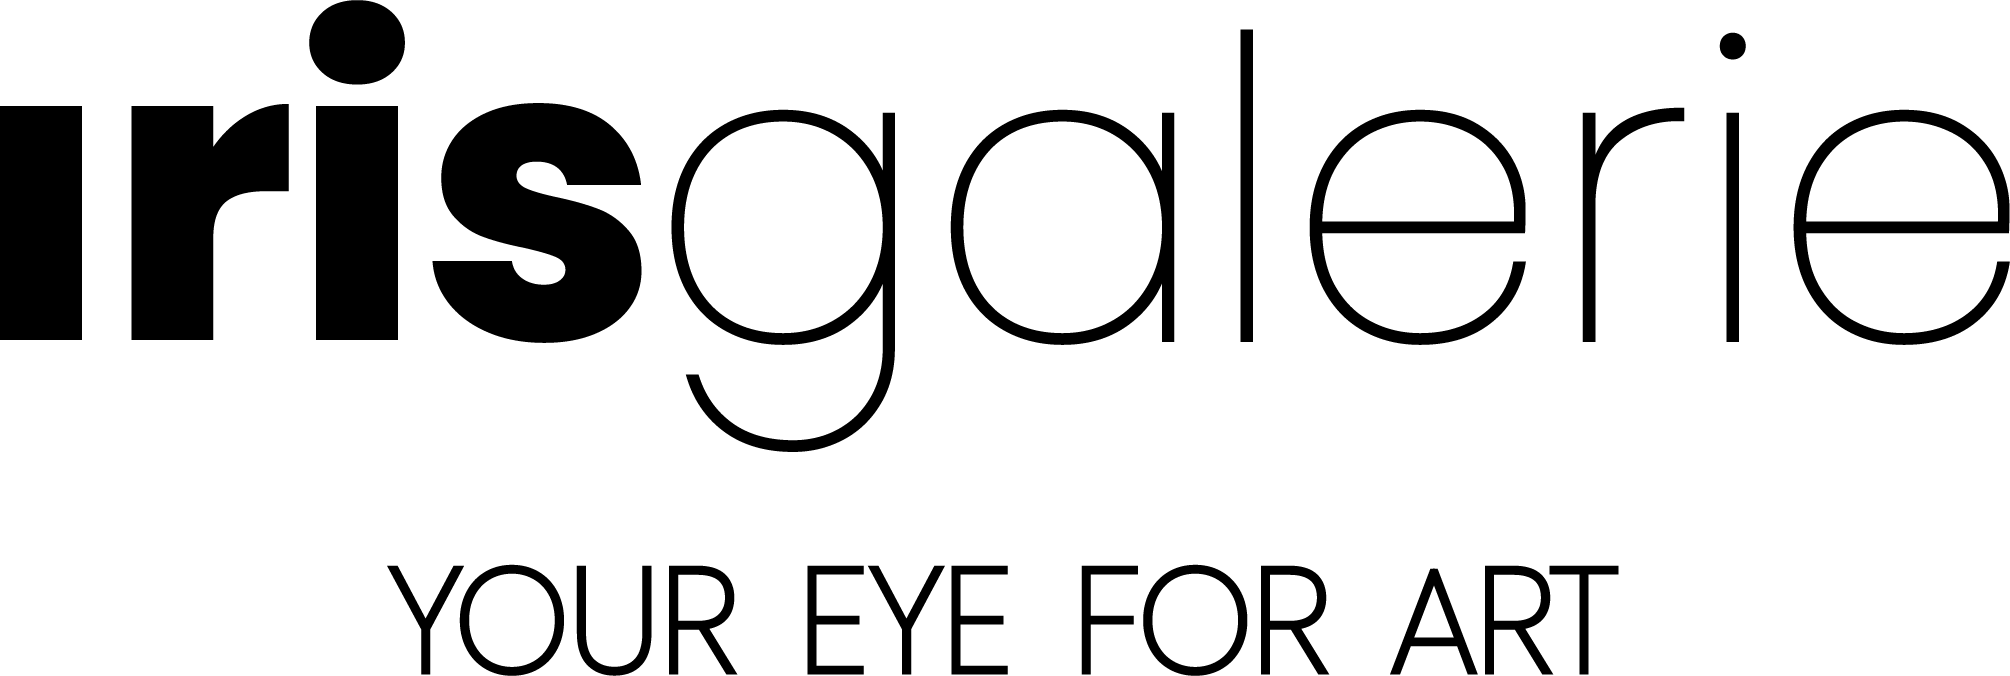 Iris galerie logo met slogan